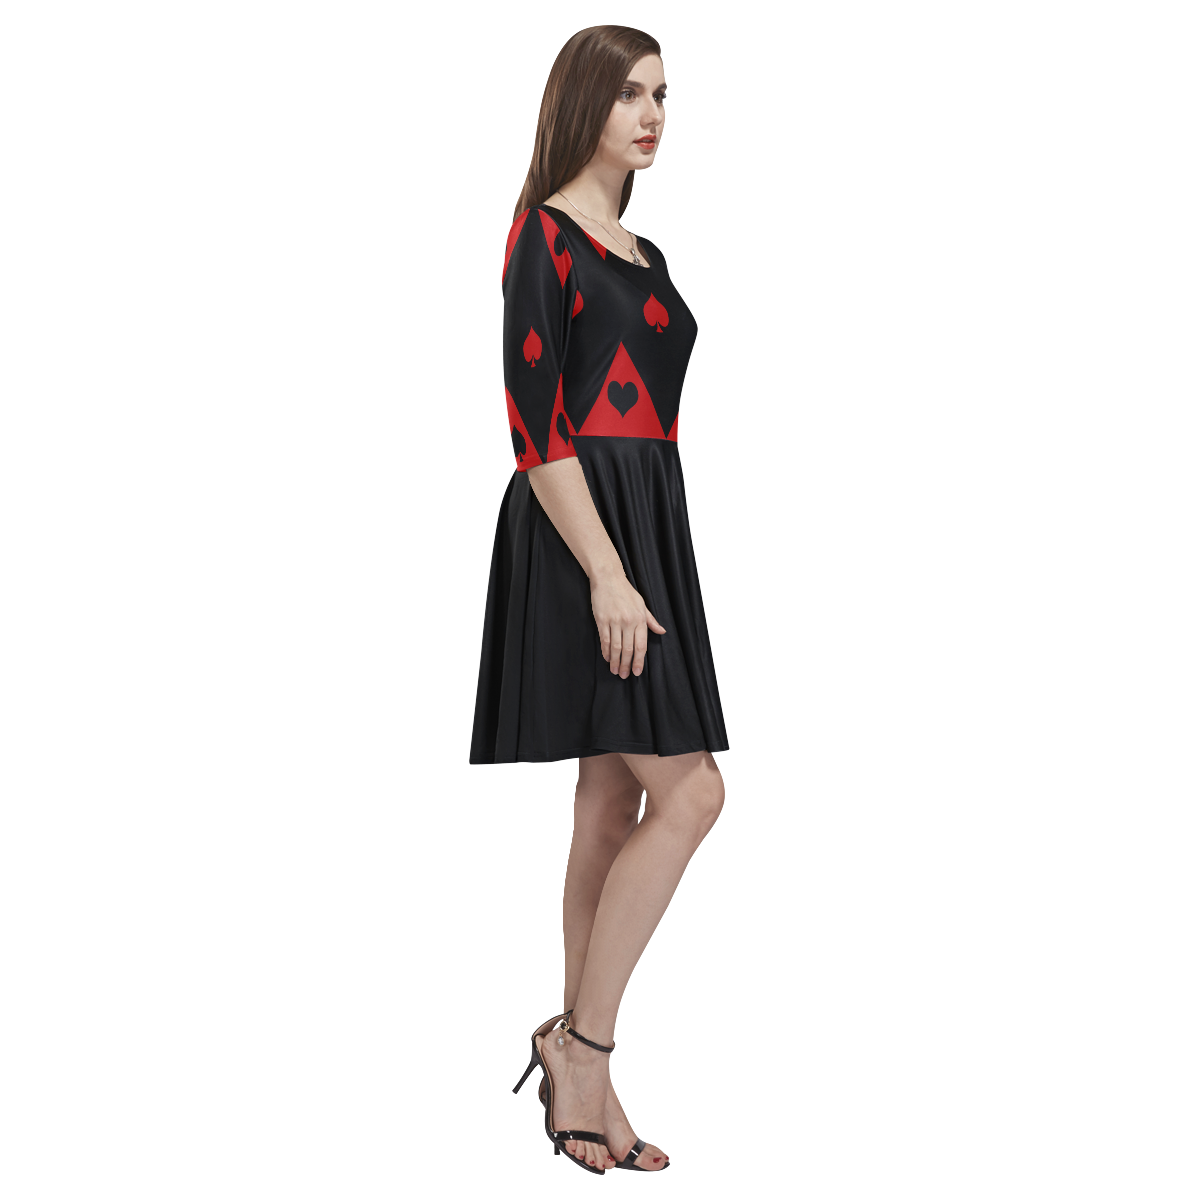 Las Vegas Black Red Play Card Shapes Tethys Half-Sleeve Skater Dress(Model D20)